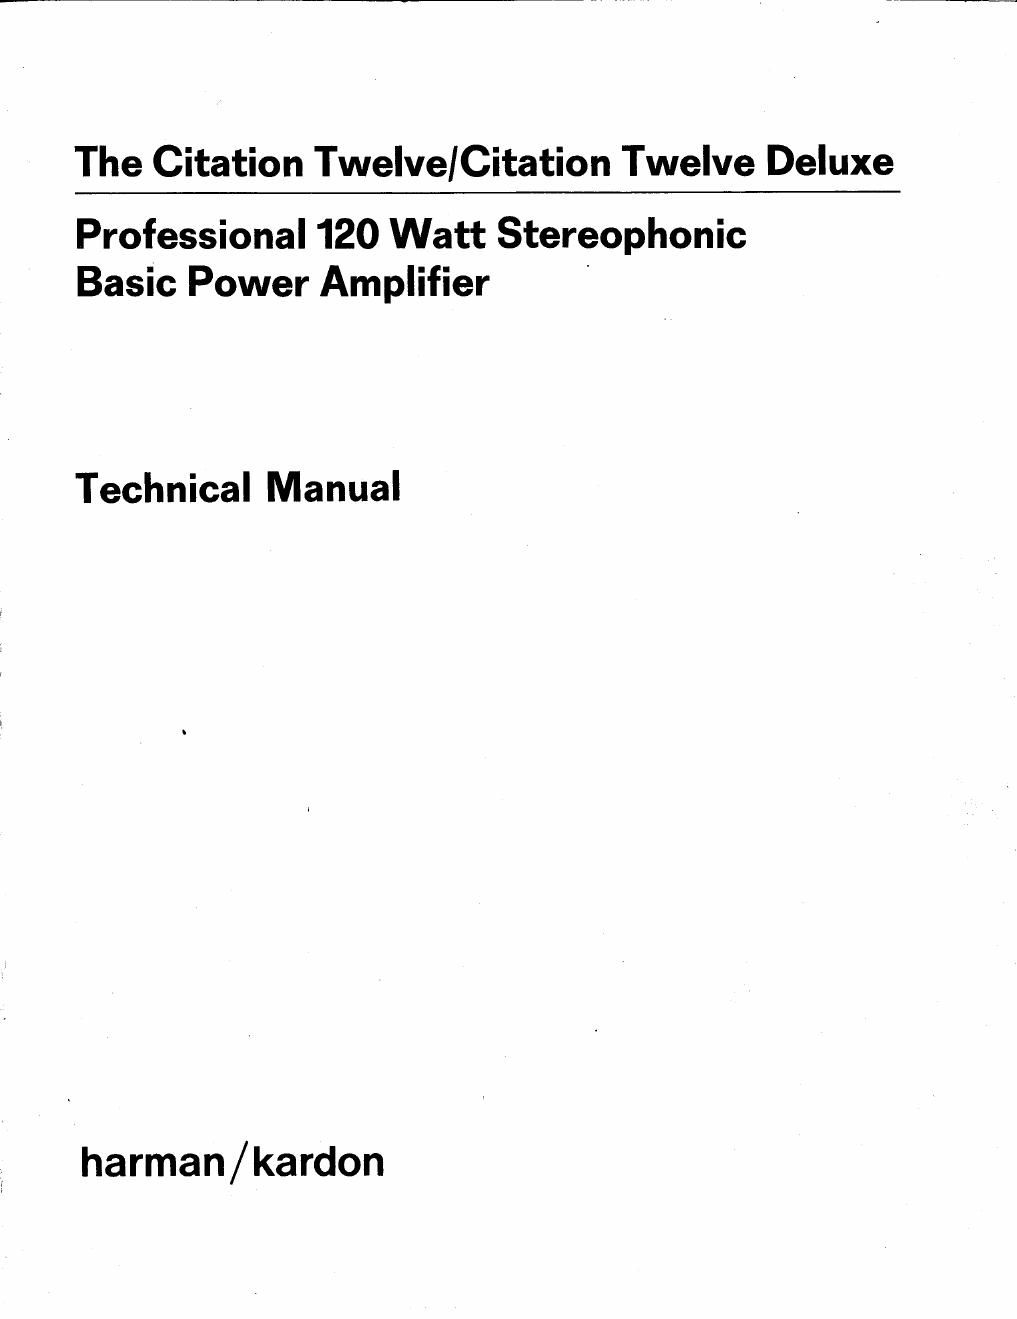 harman kardon citation 12 twelve deluxe service manual